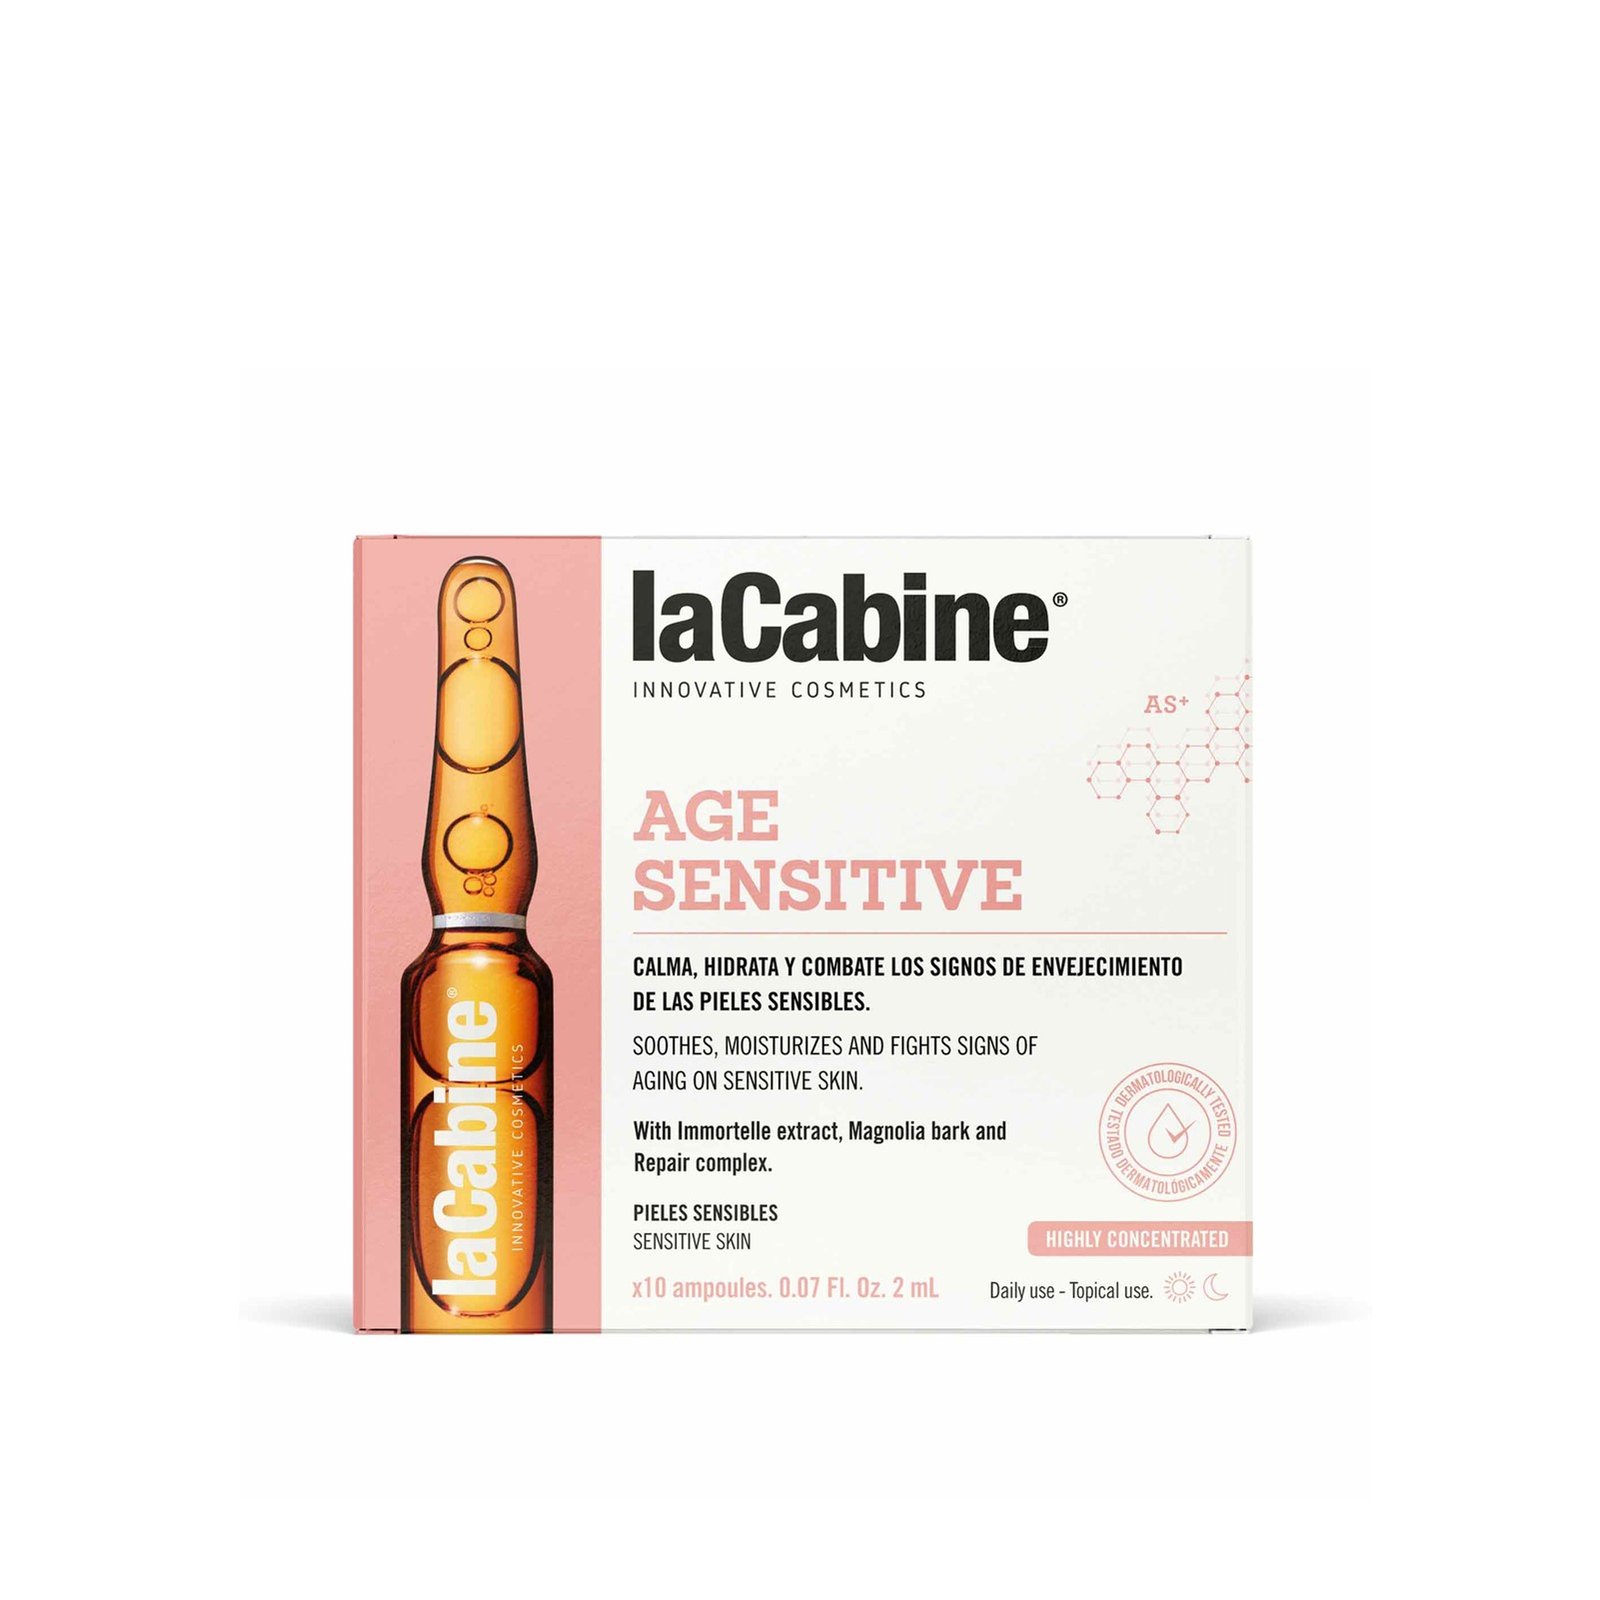 La Cabine Age Sensitive Concentrated Ampoules 10x2ml (10x0.07 fl oz)